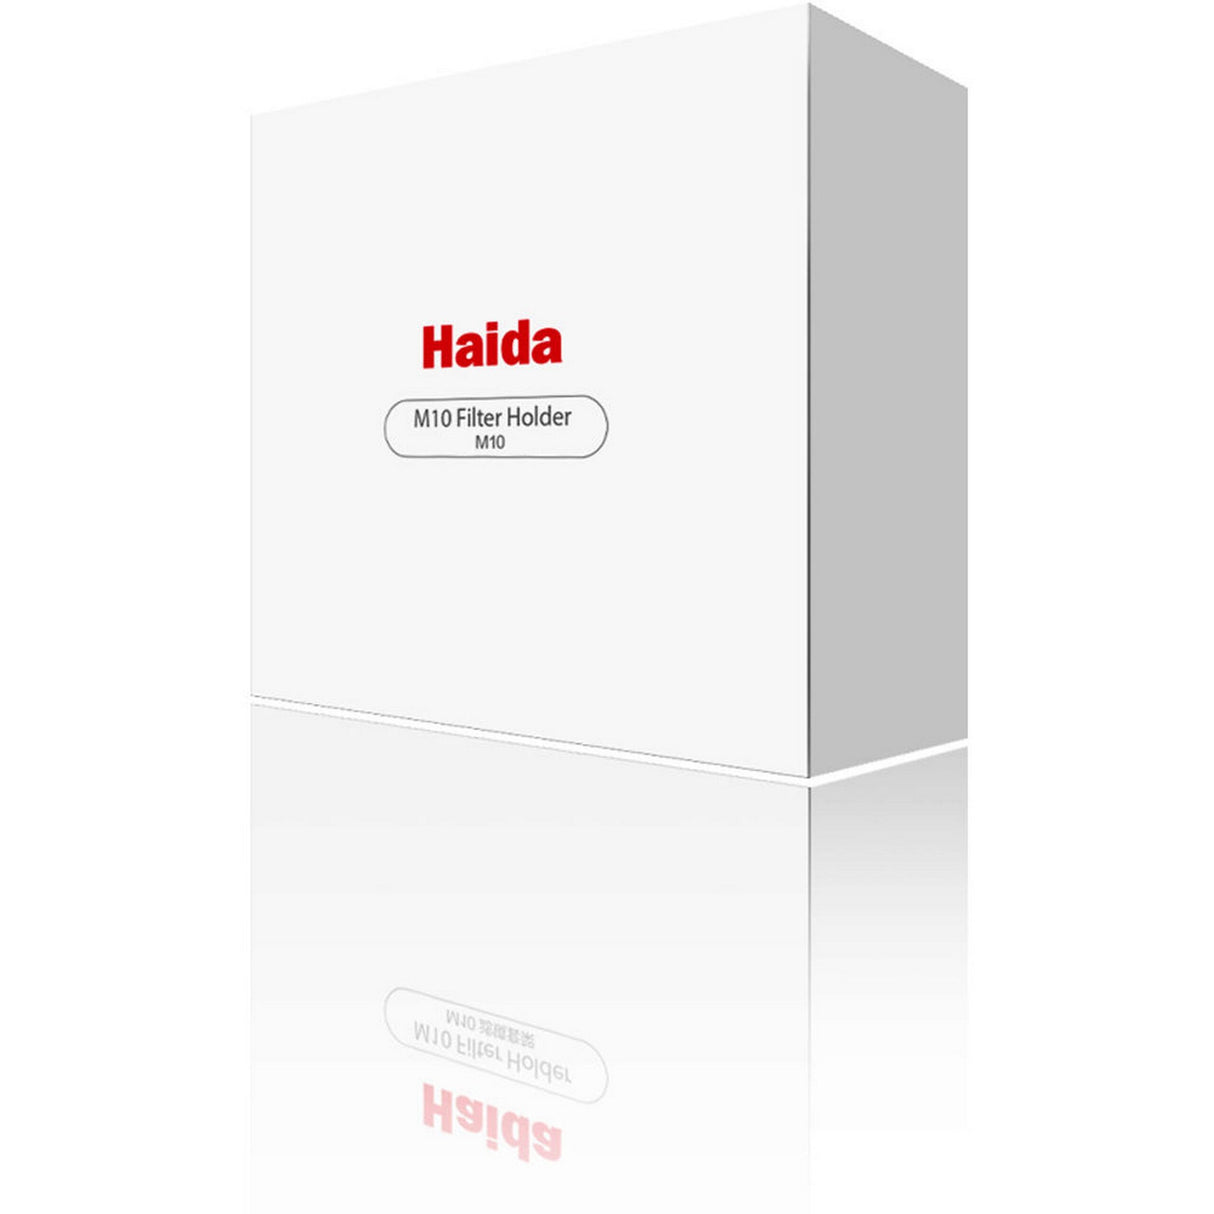 Haida HD4250 M10 100mm Filter Holder